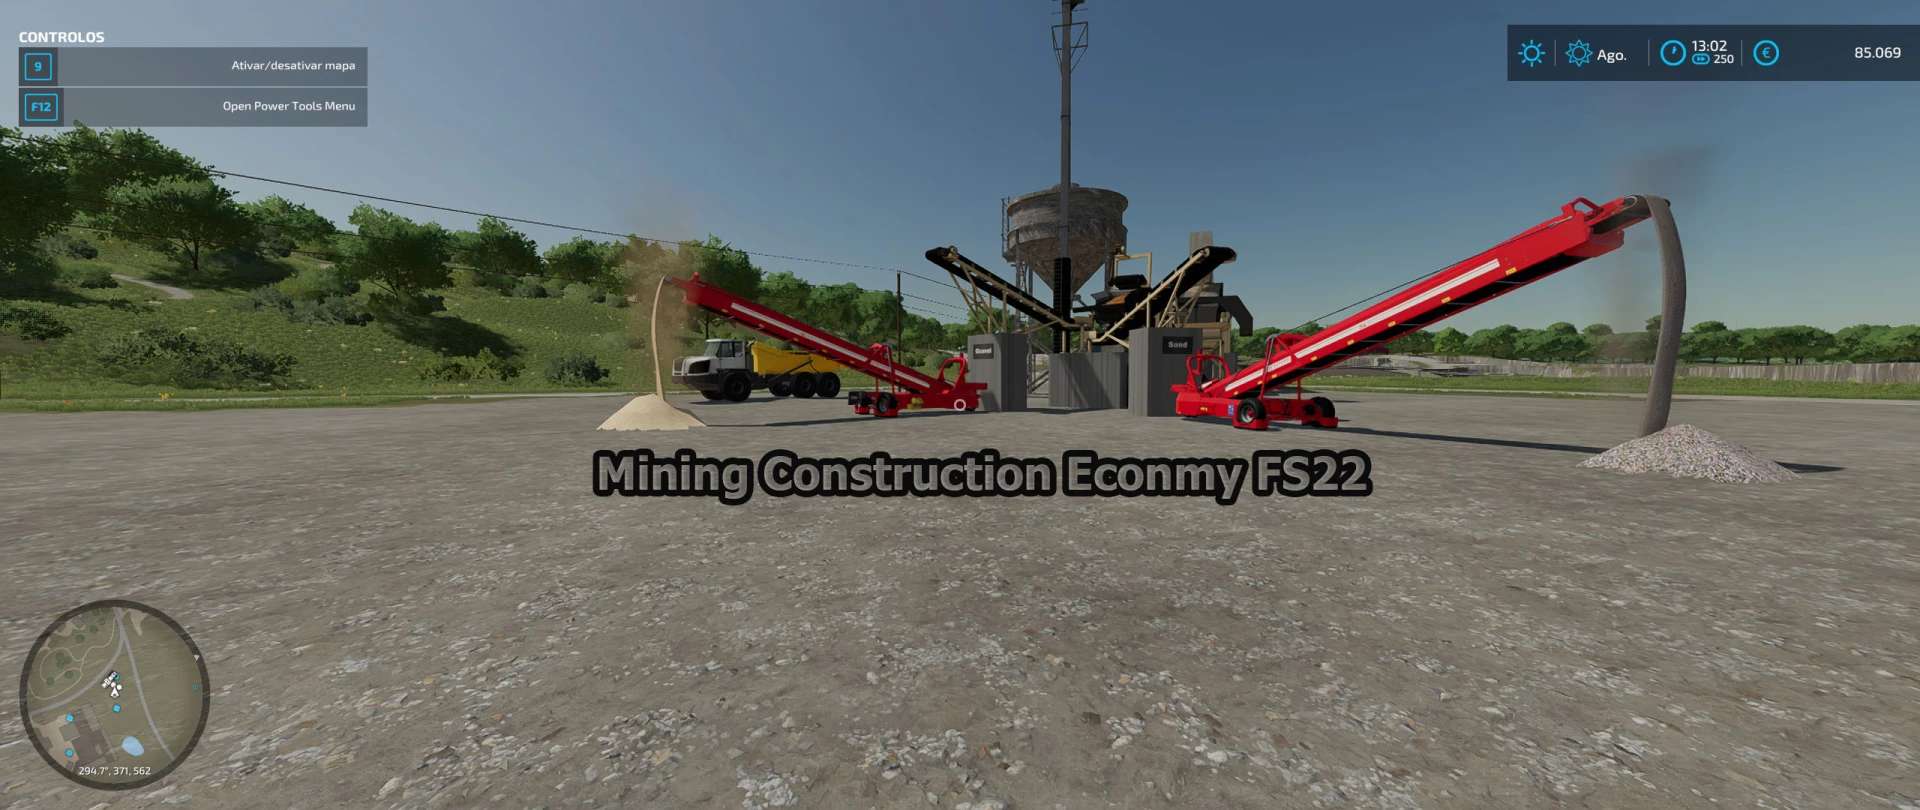 Mining Construction Economy V5000 Map Farming Simulator 2022 19 Mod 3659